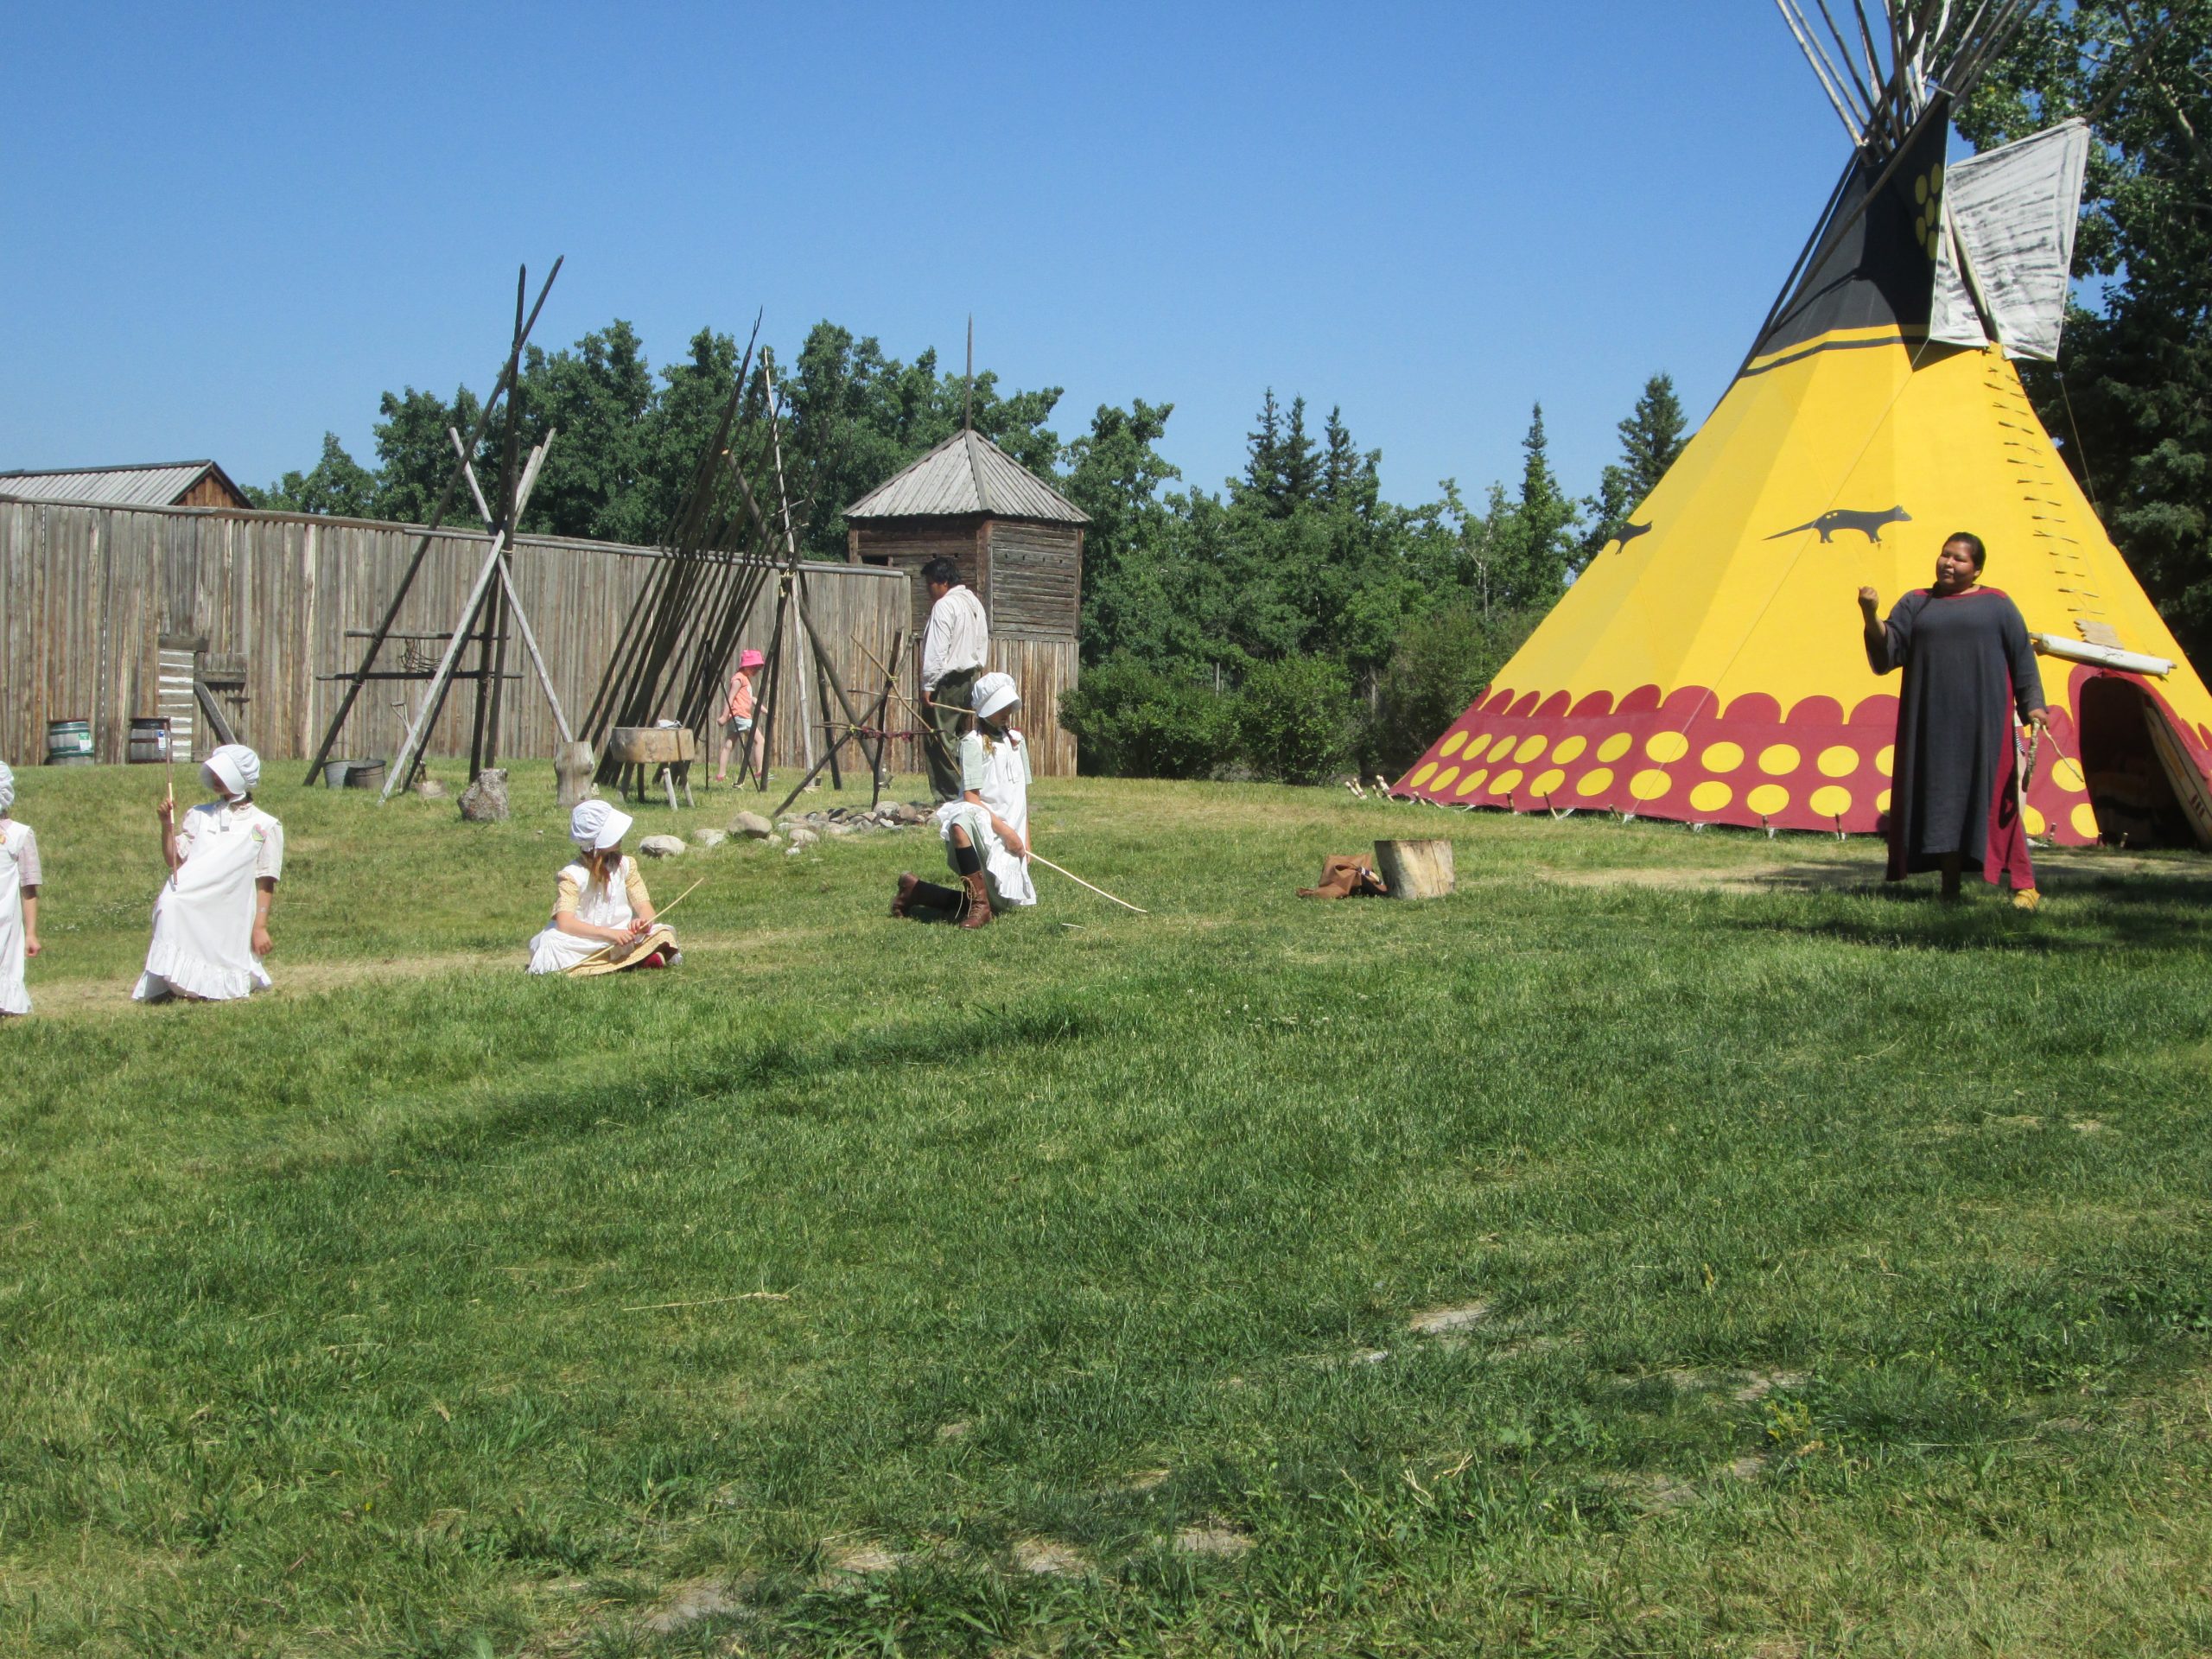 Indigenous experiences at Heritage Park in Calgary Alberta